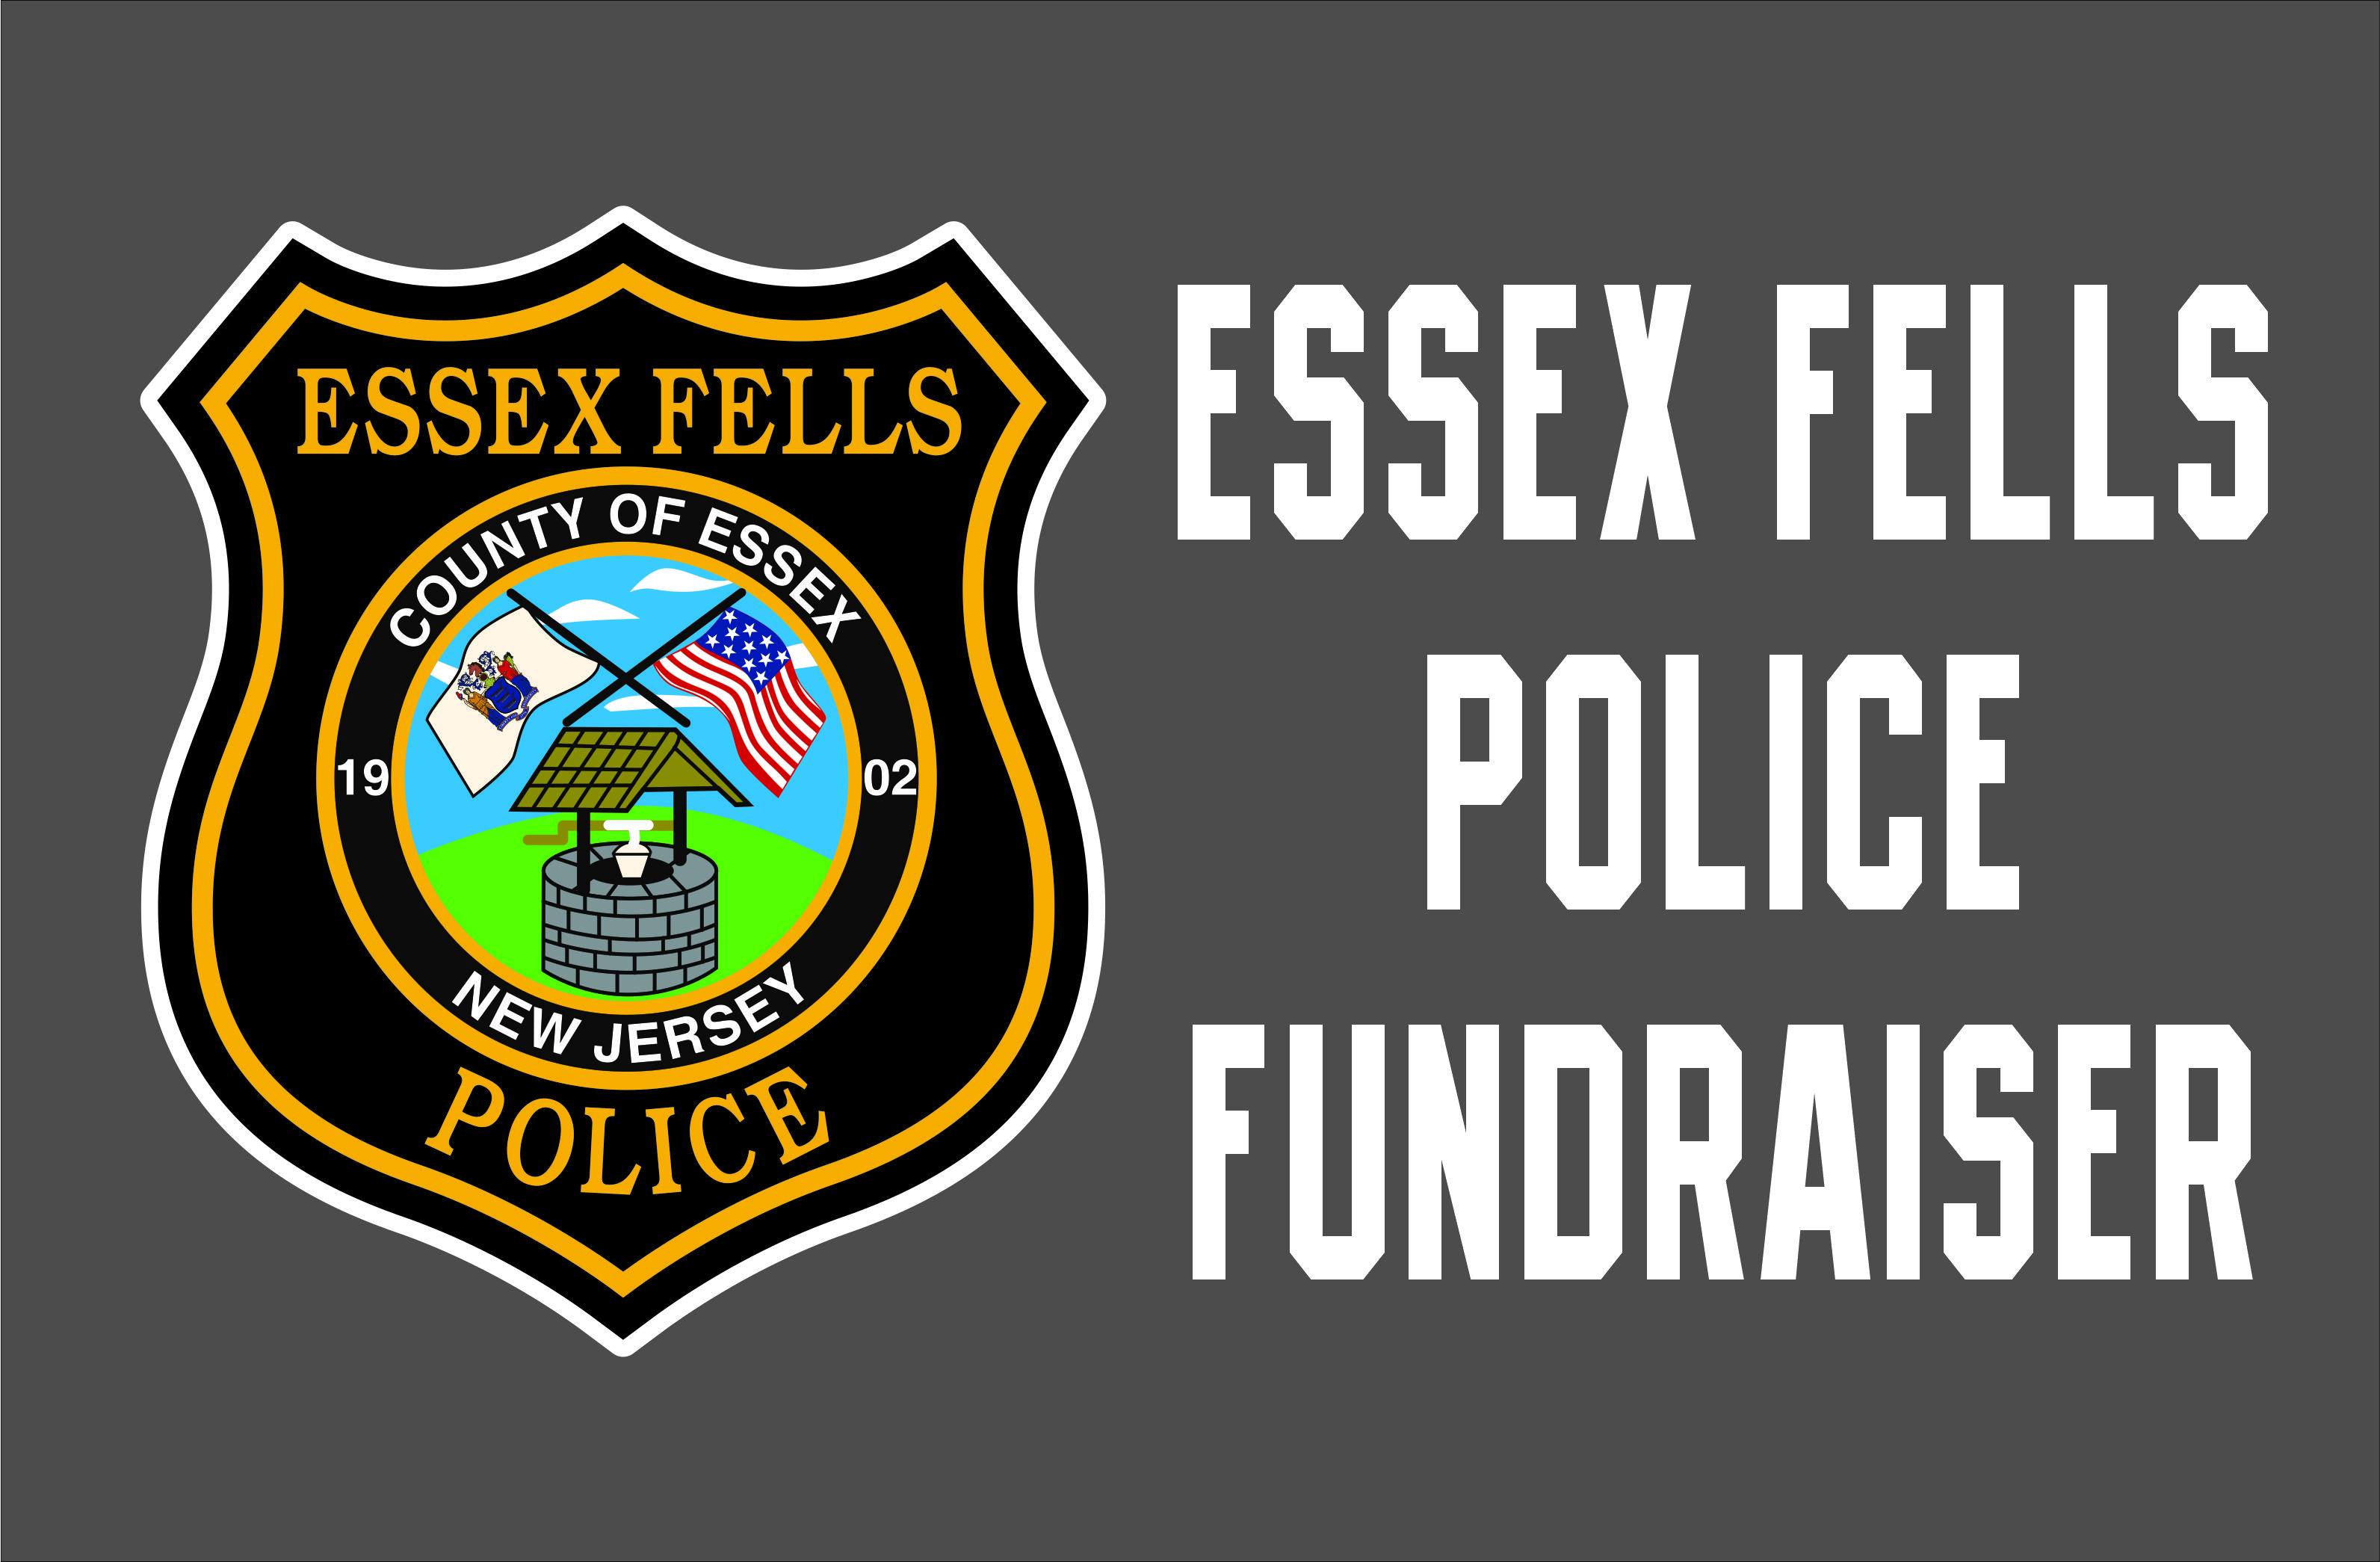 Essex Fells Police Foundation Fundraiser